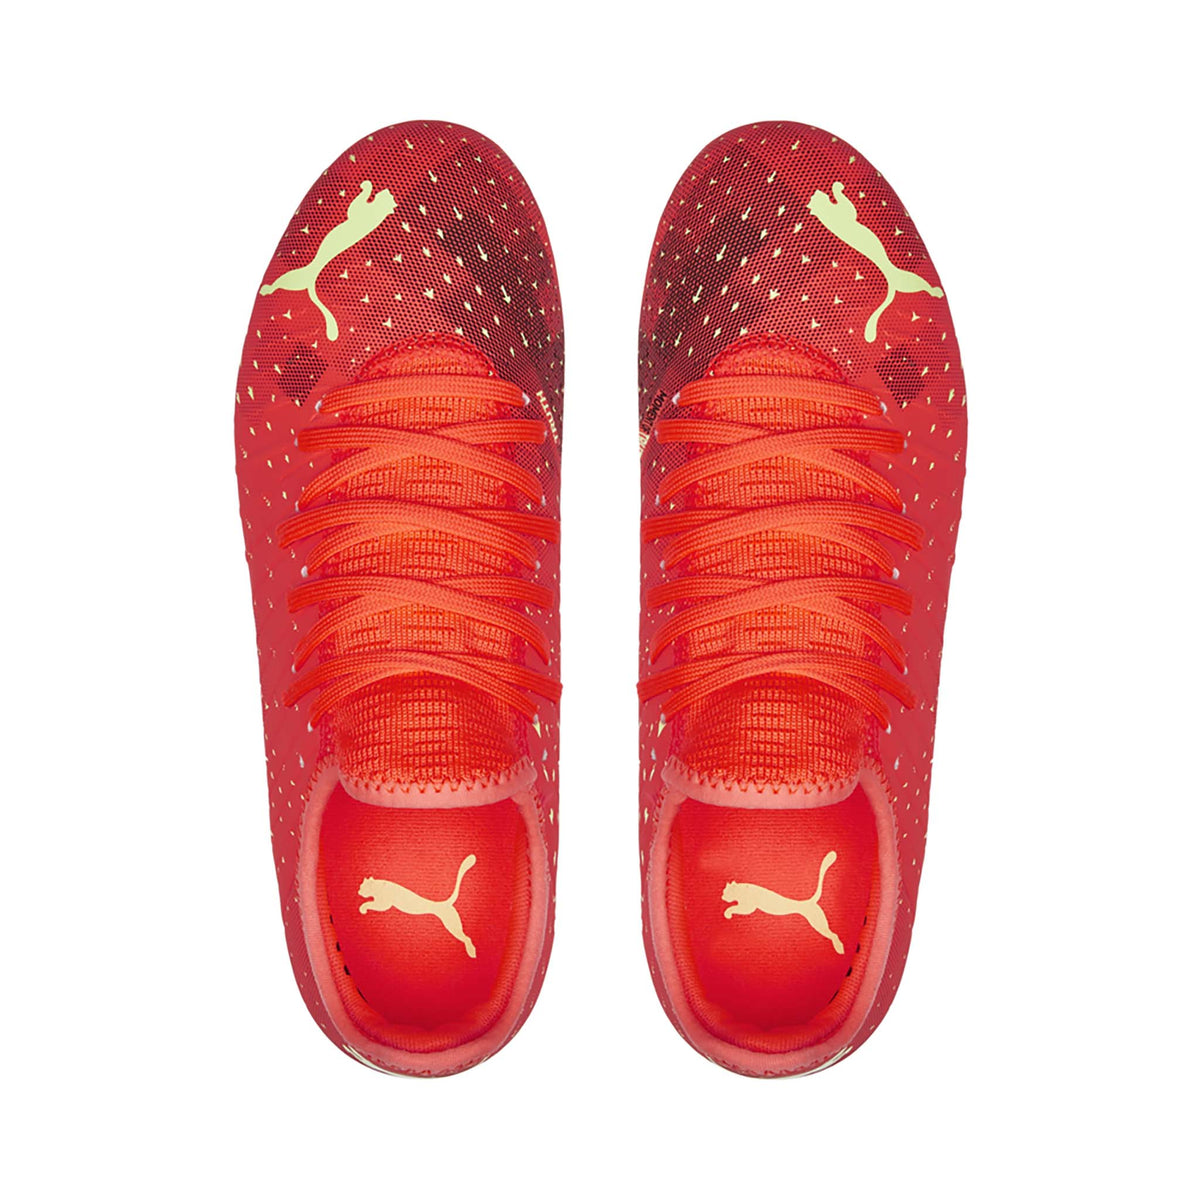 Puma Future Z 4.4 FG/AG junior souliers de soccer fiery coral empeigne